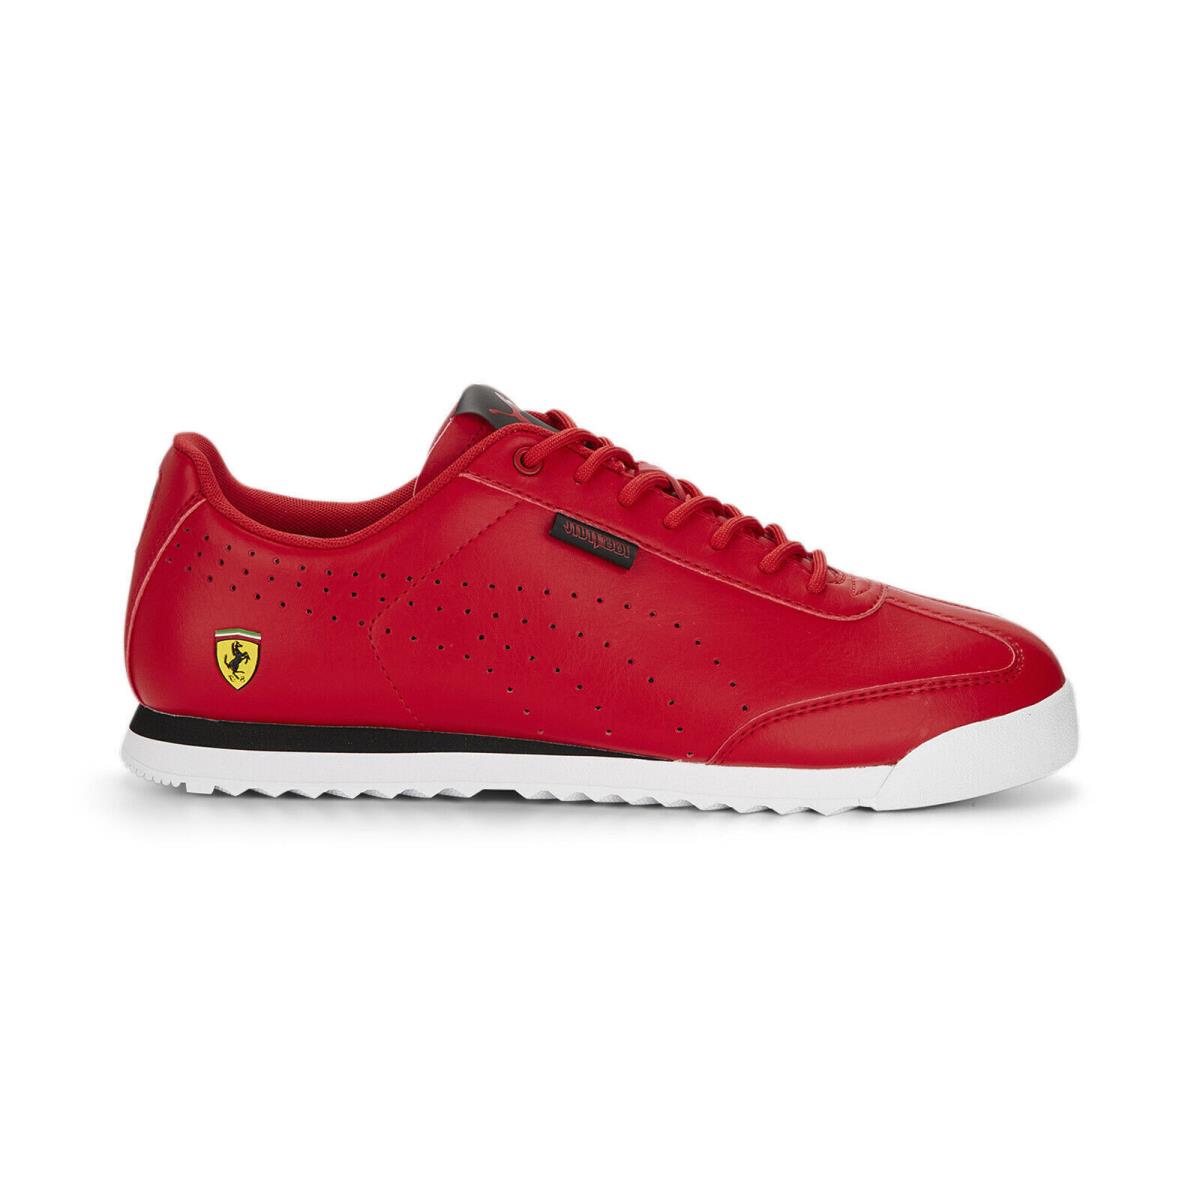 Puma Mens Ferrari Roma Via Perf Red Motorsport Sneakers Shoes - Red